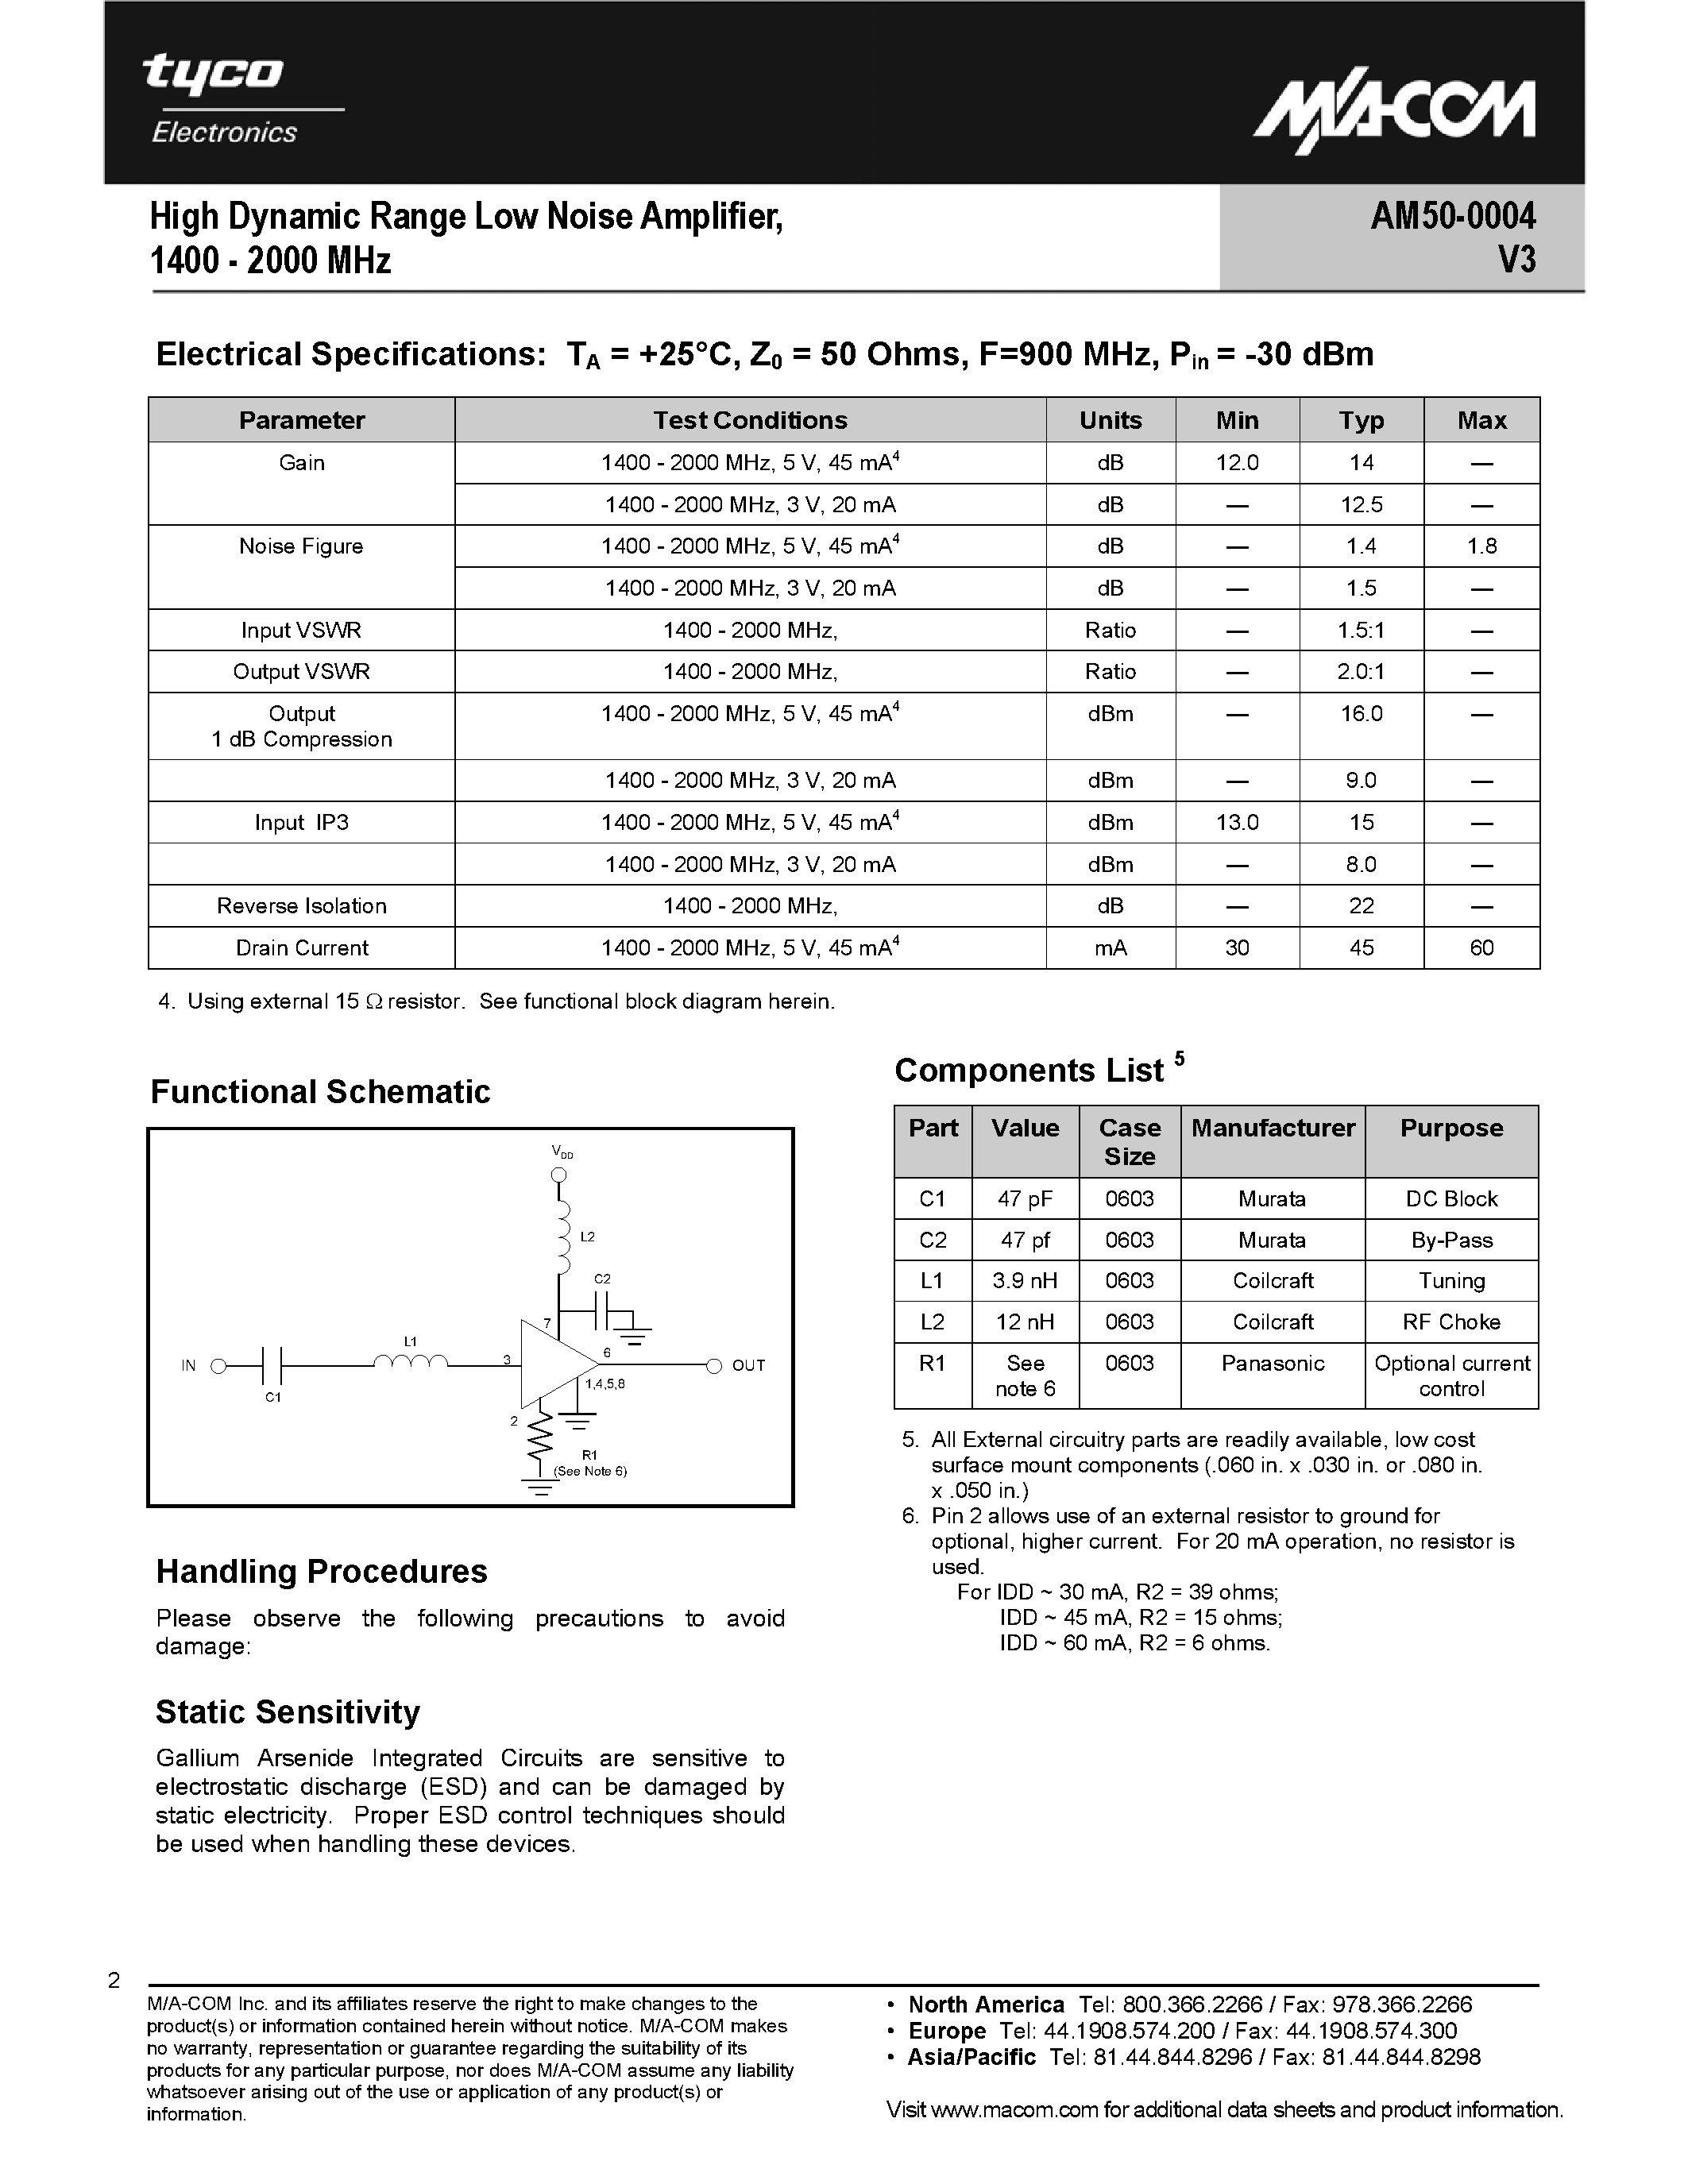 Datasheet AM50-0004V3 - High Dynamic Range Low Noise Amplifier page 2